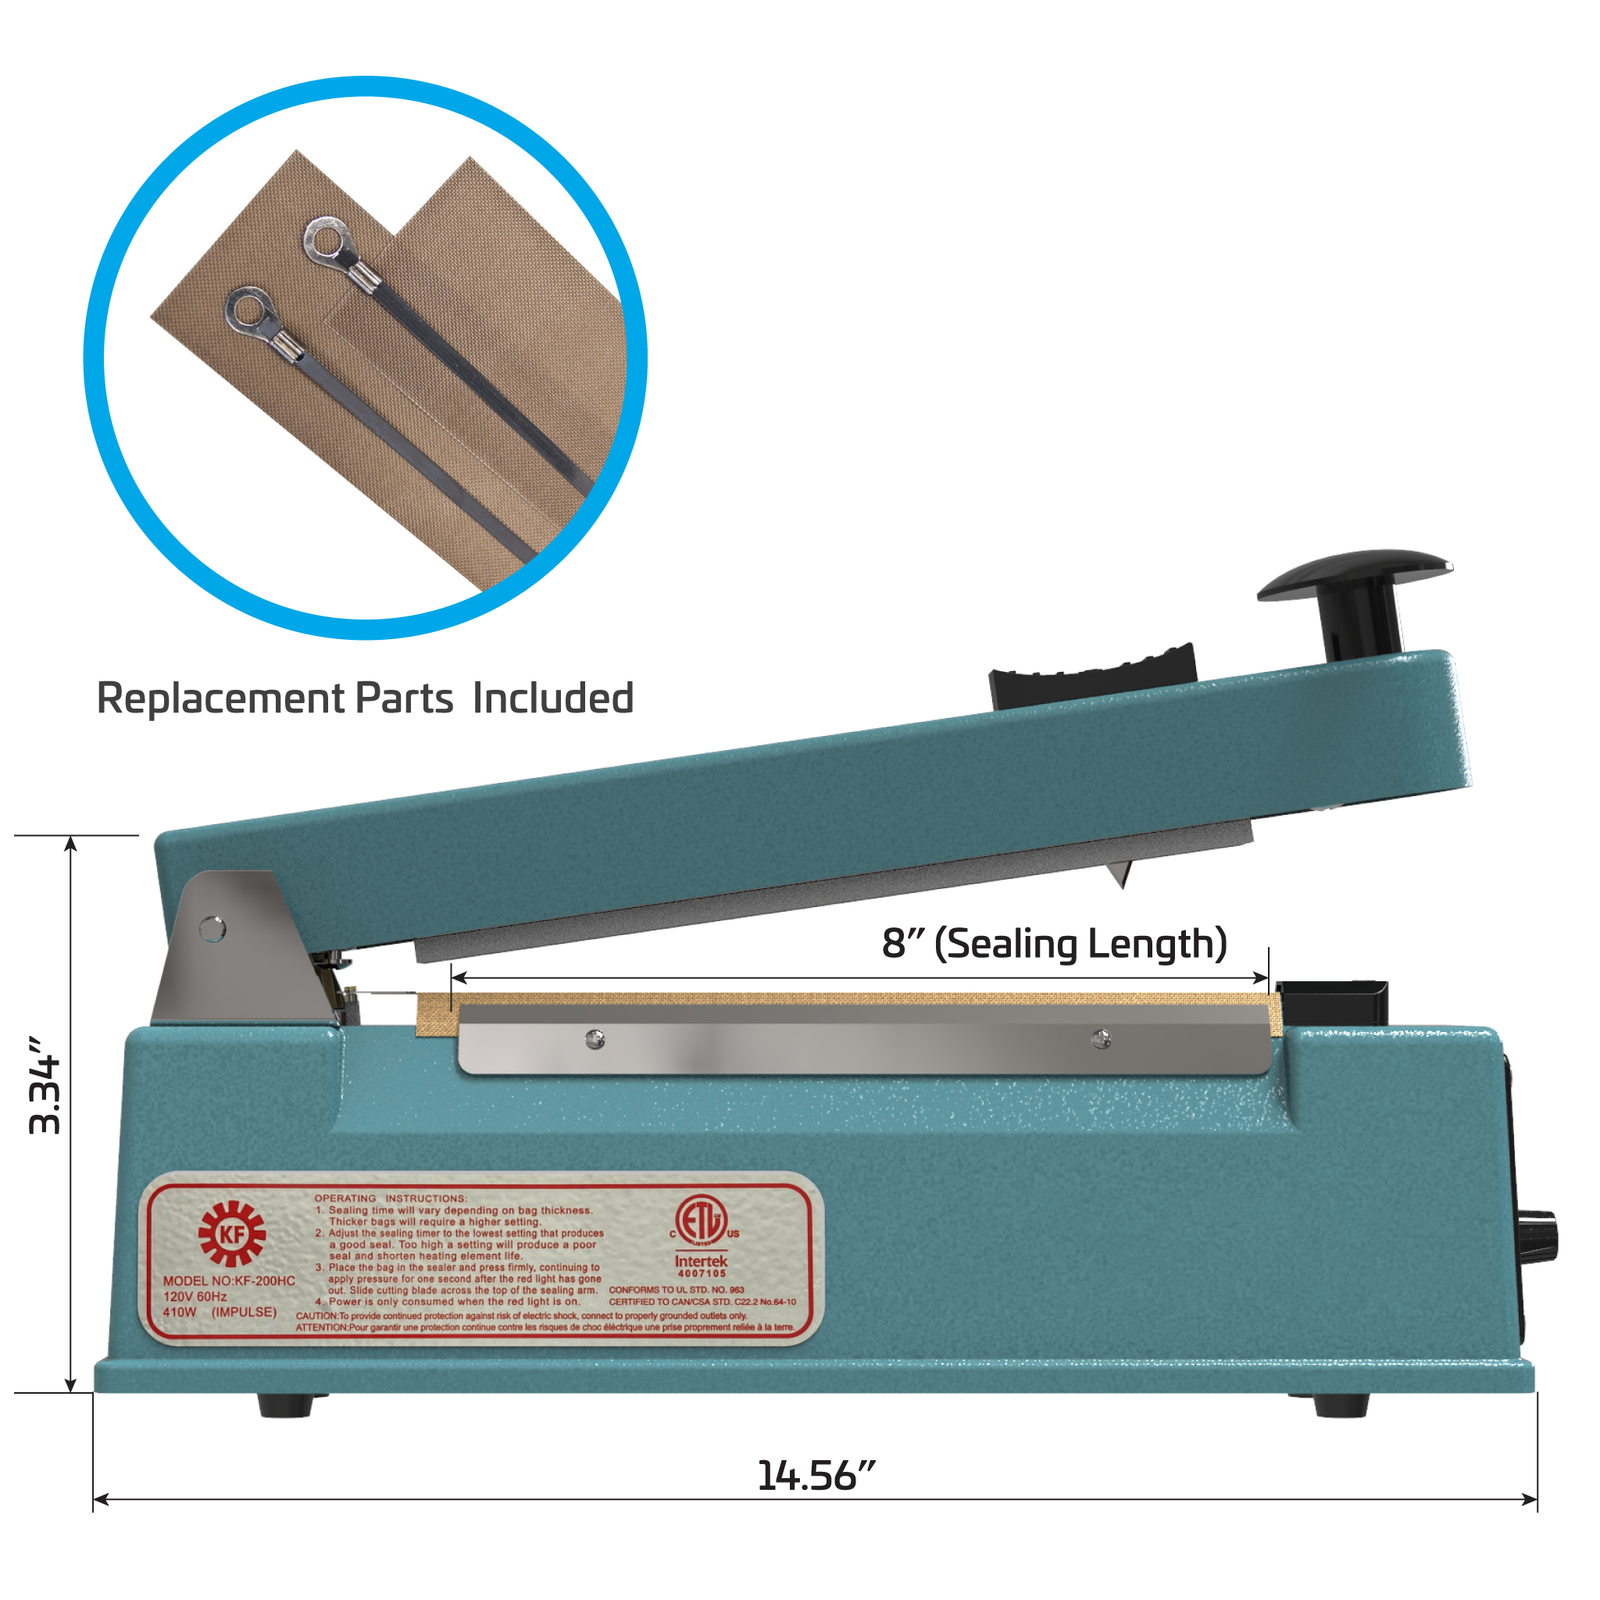 8” Manual Impulse Bag Sealer with Cutter